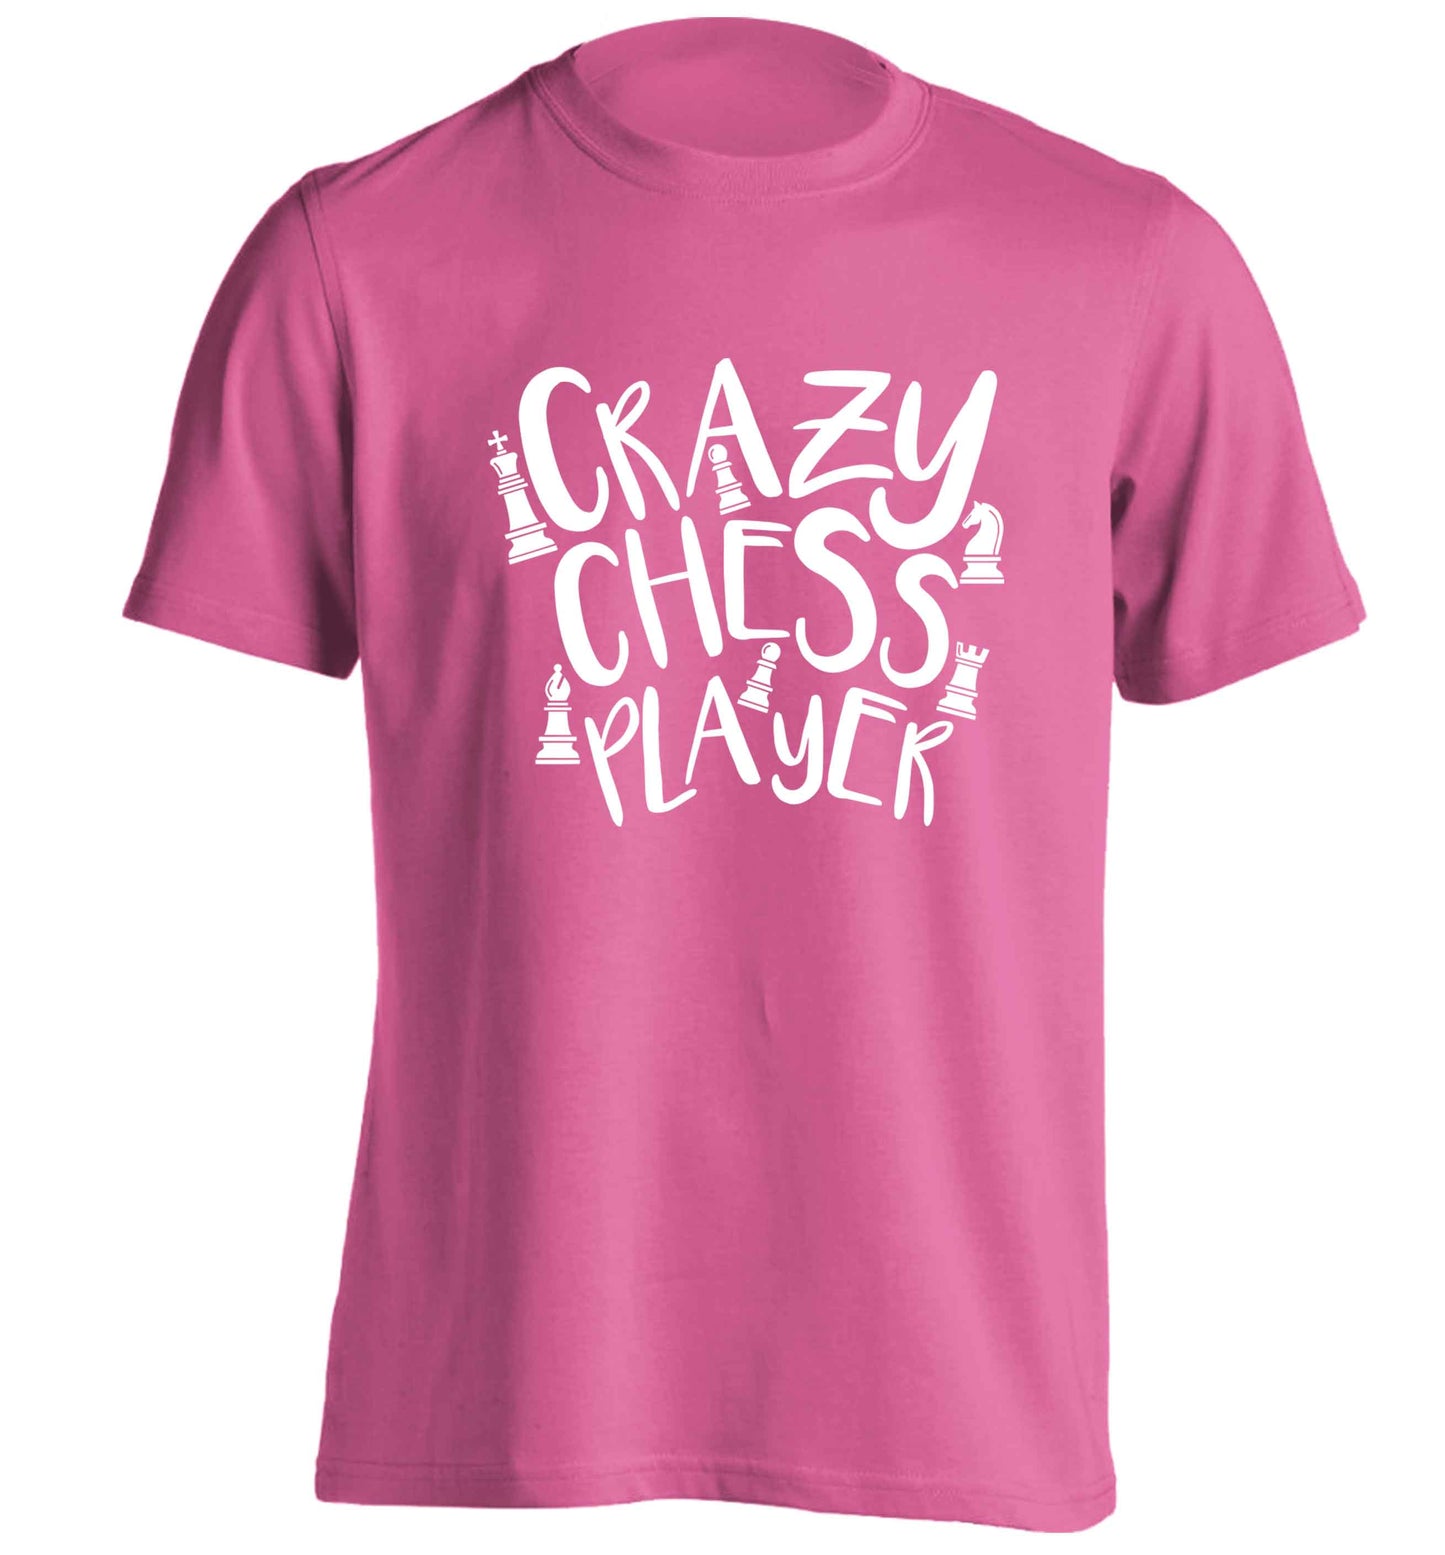 Crazy chess player adults unisex pink Tshirt 2XL